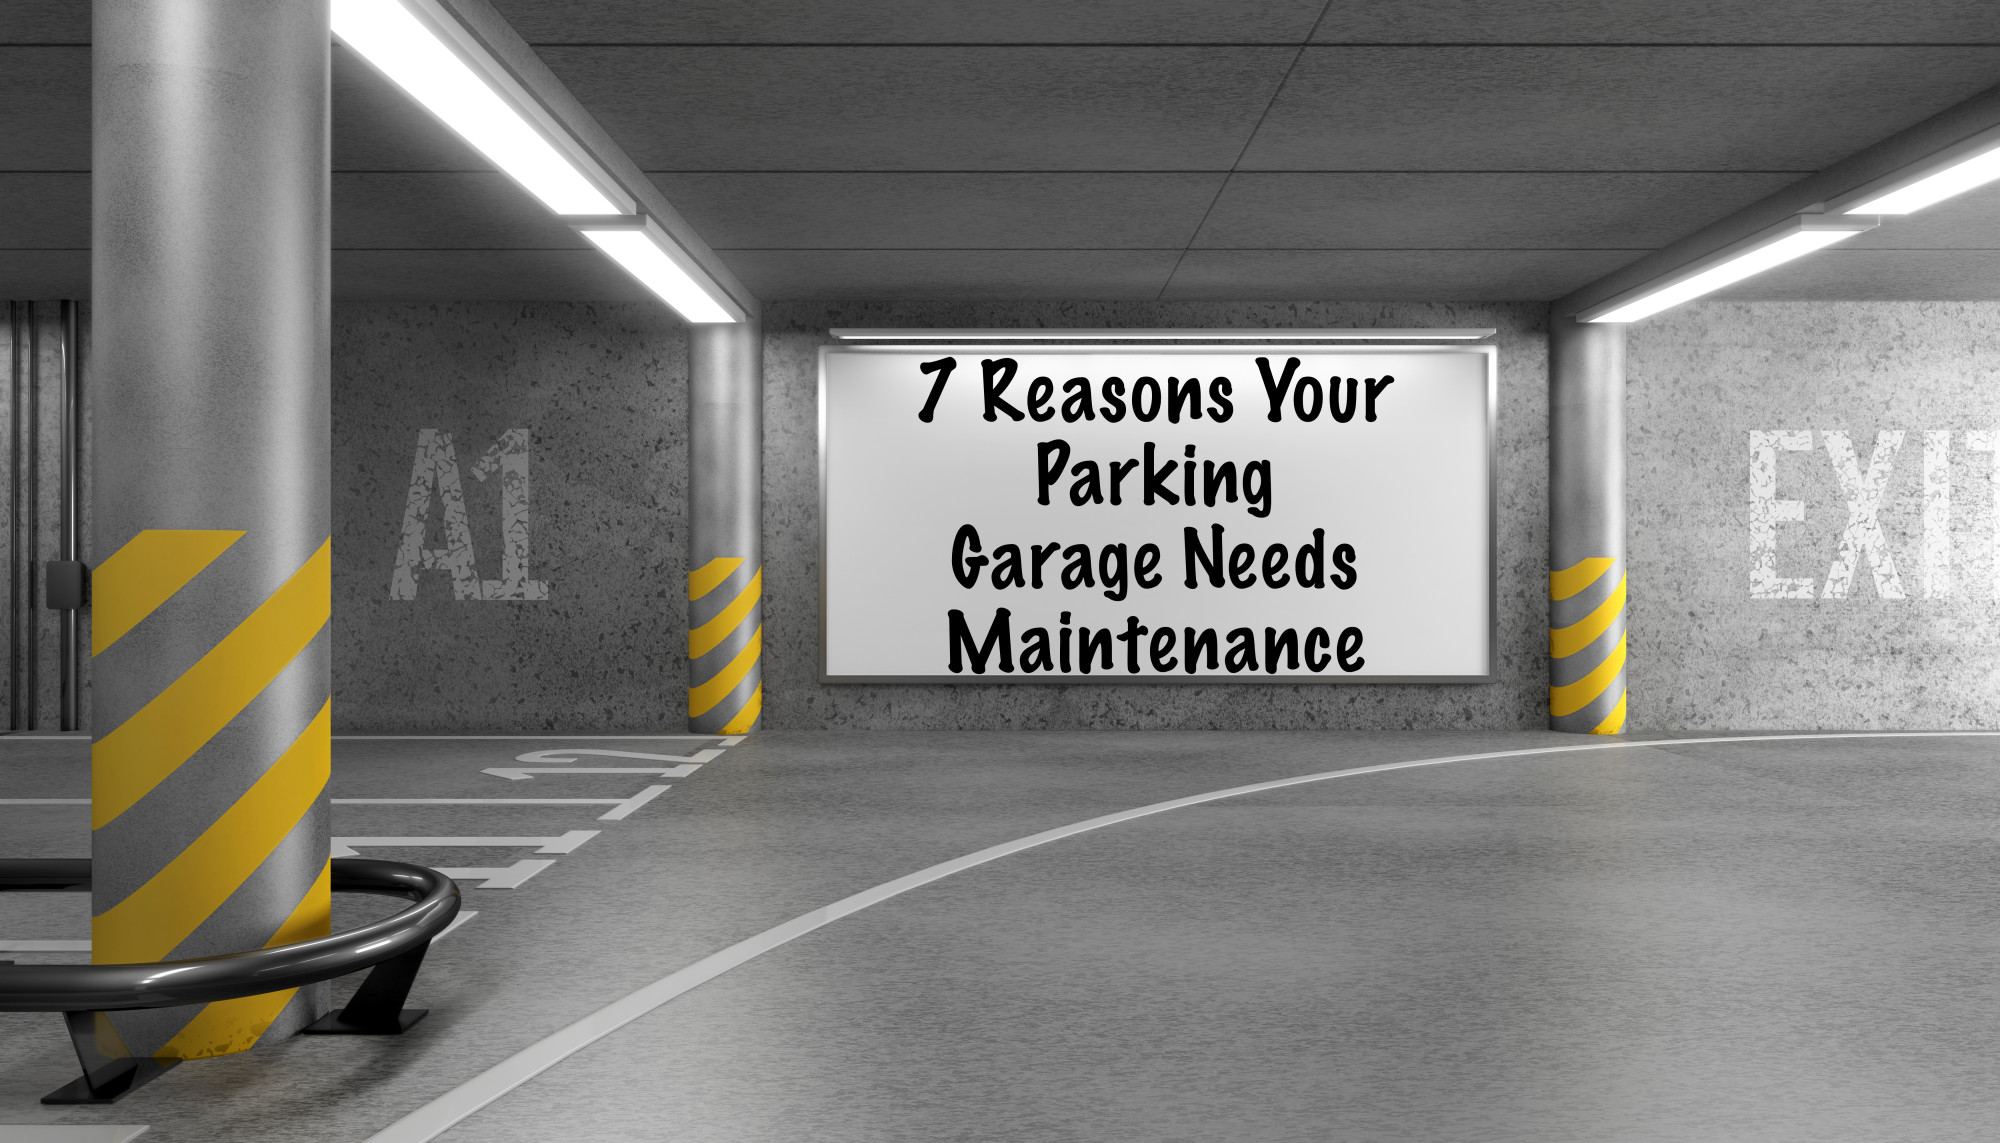 Reasons Your Parking Garage Needs Maintenance